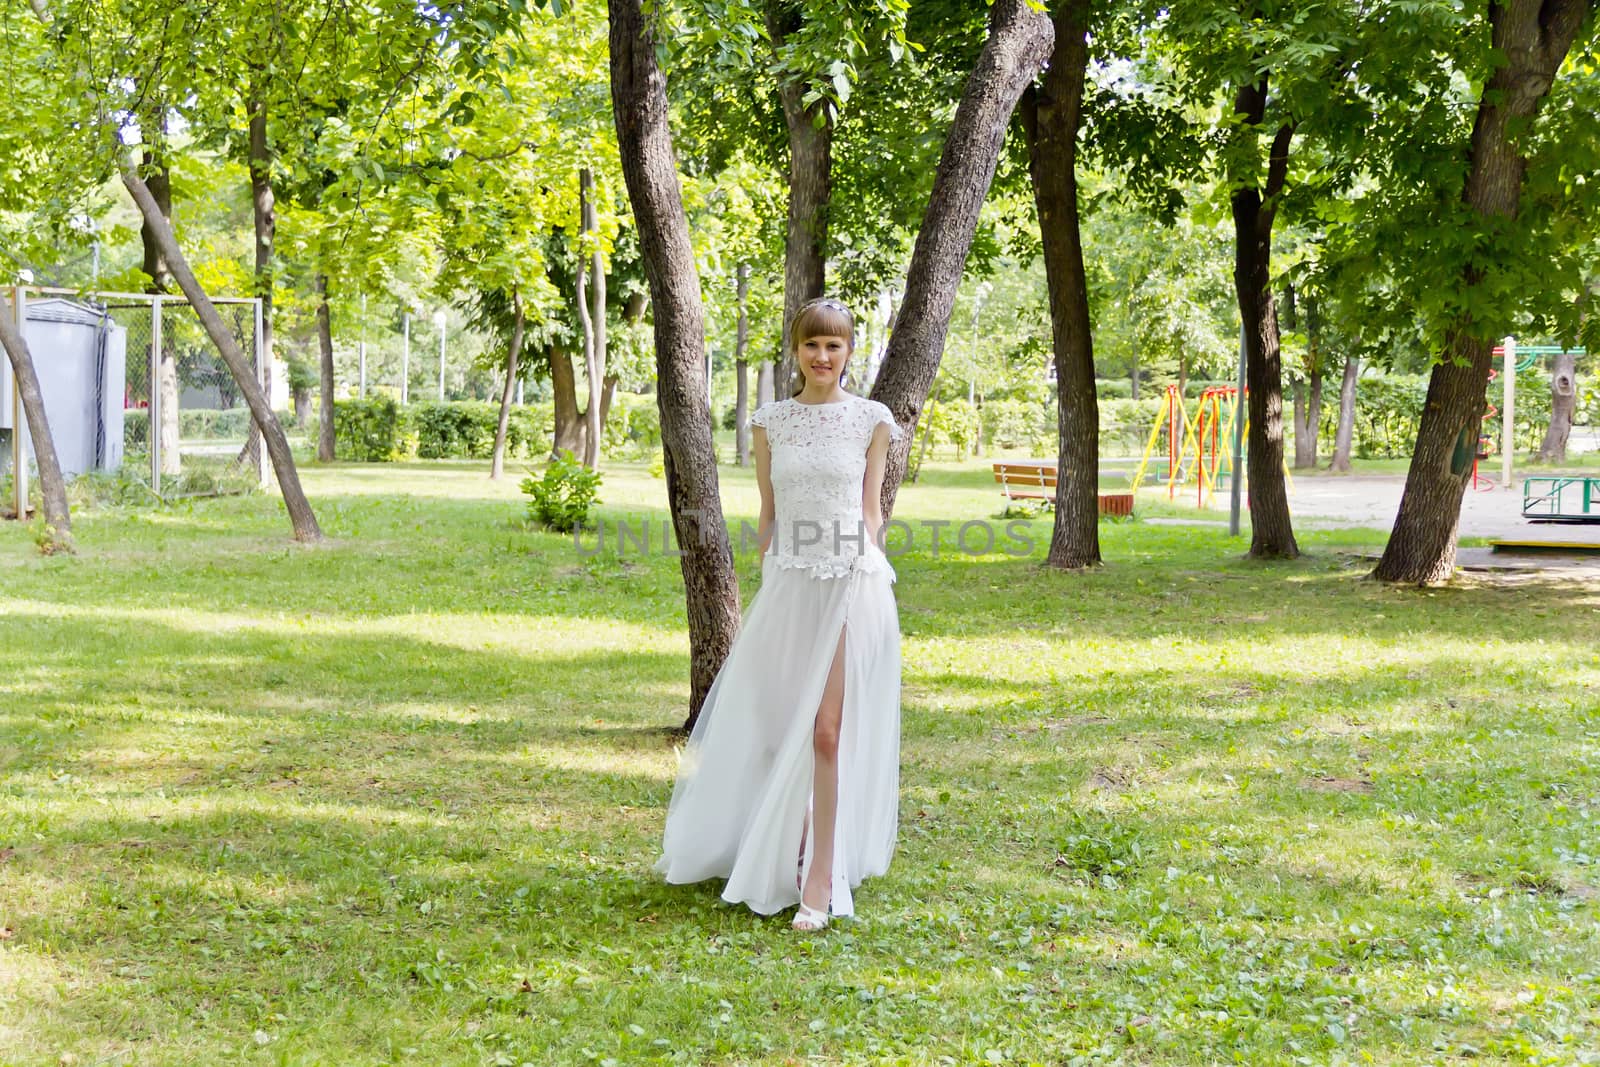 Bride in white lace dress walking in summer park